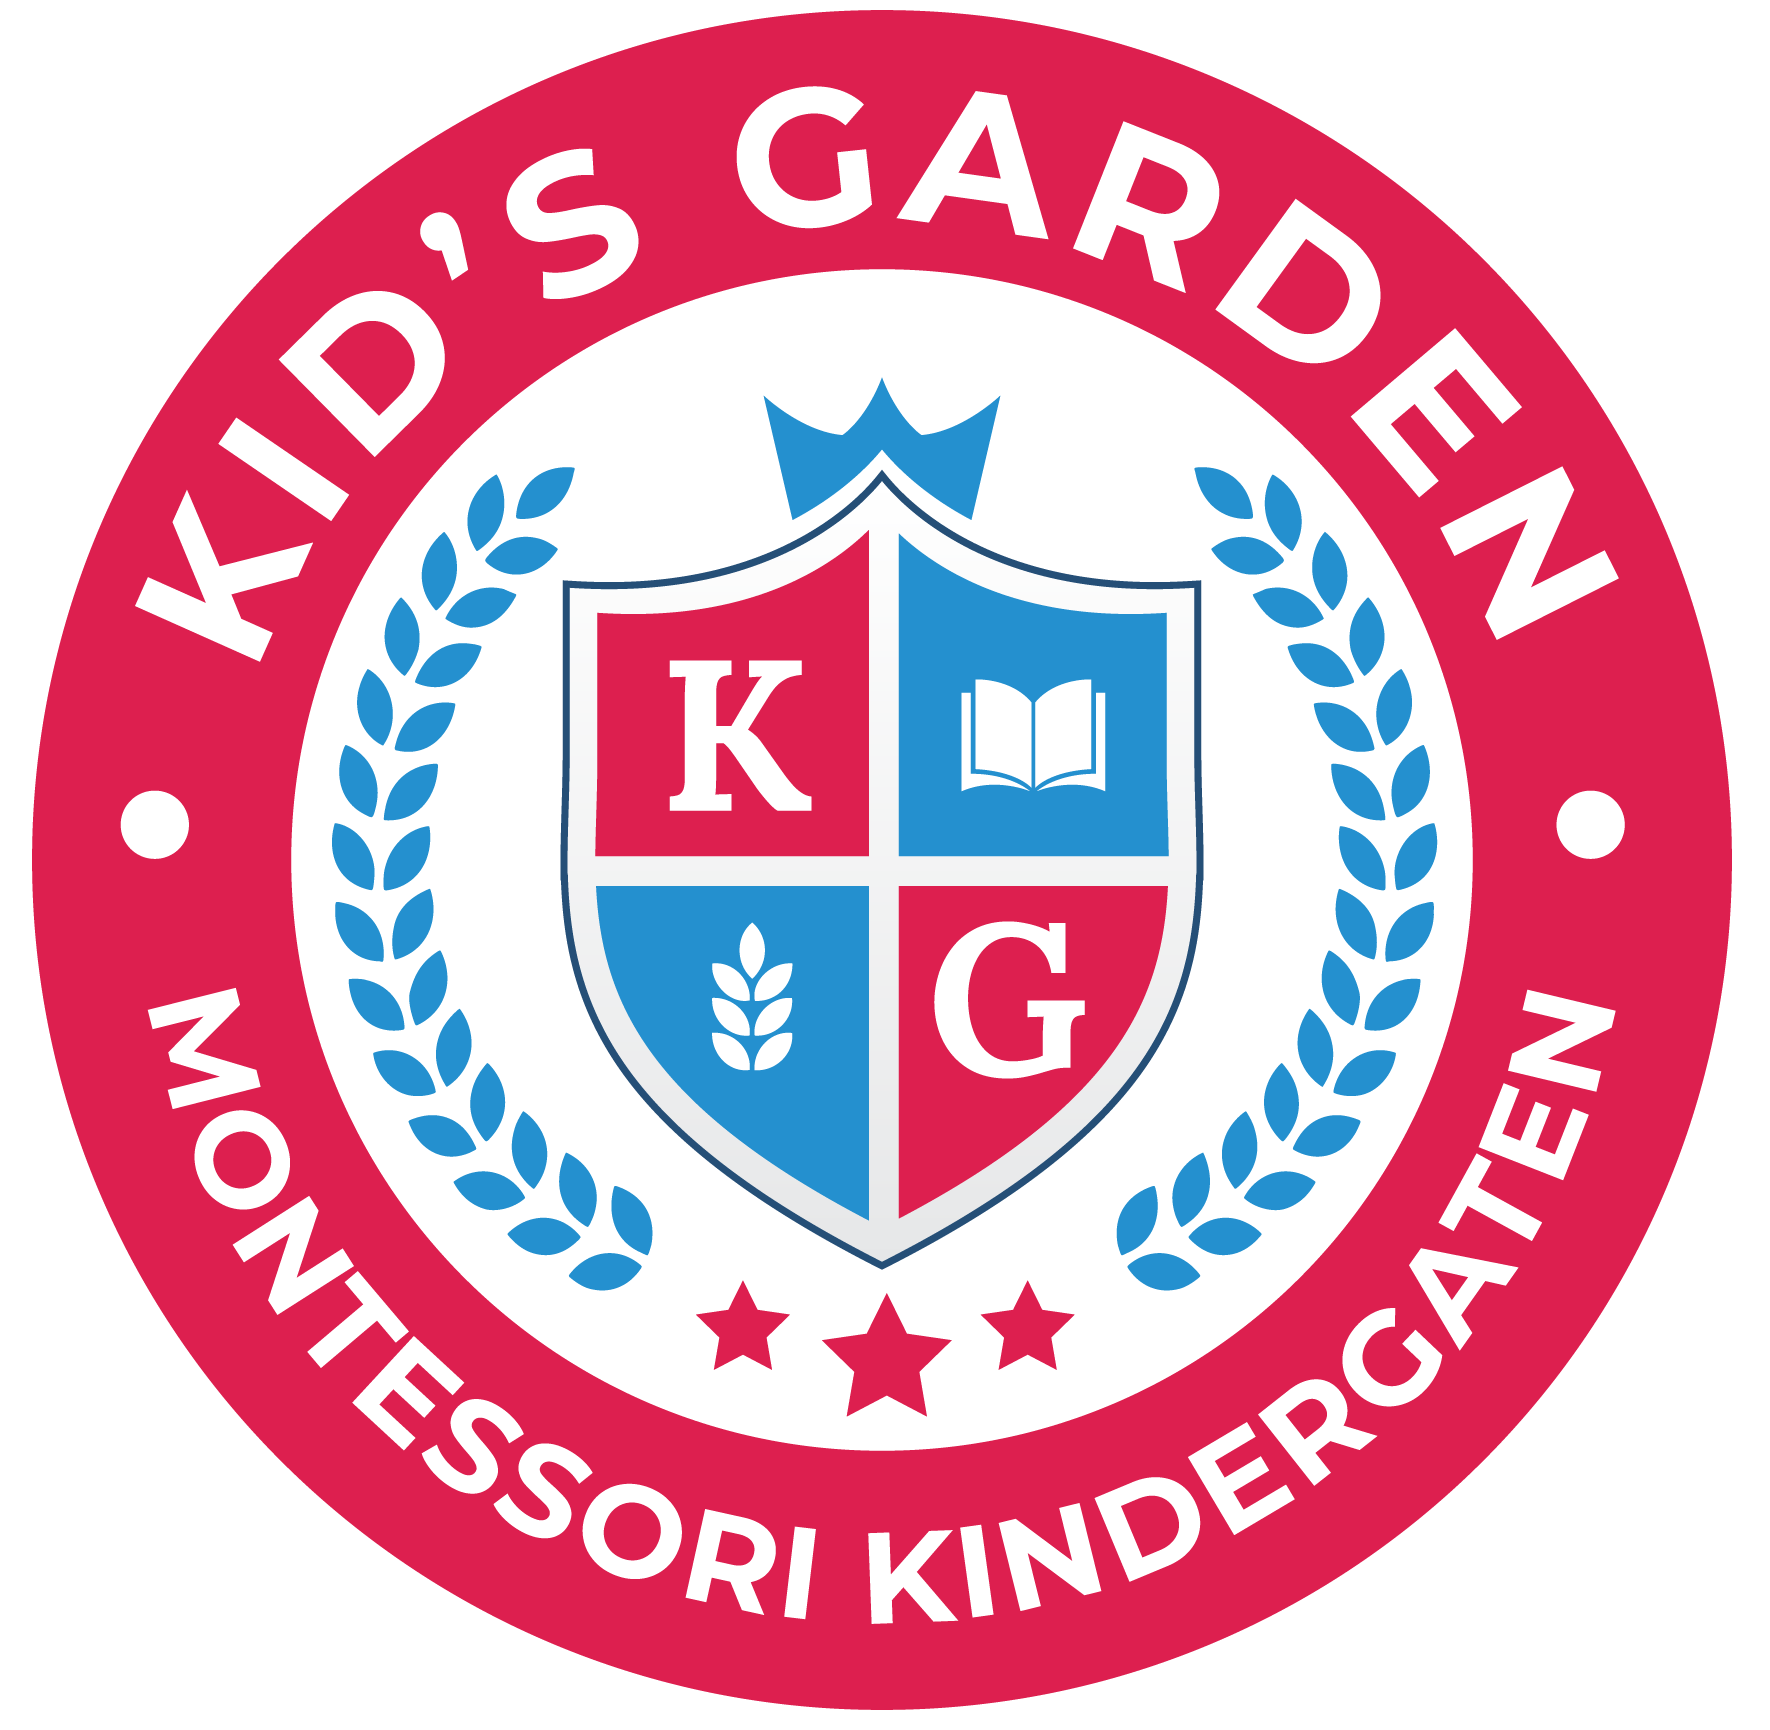 LOGO Kids Garden